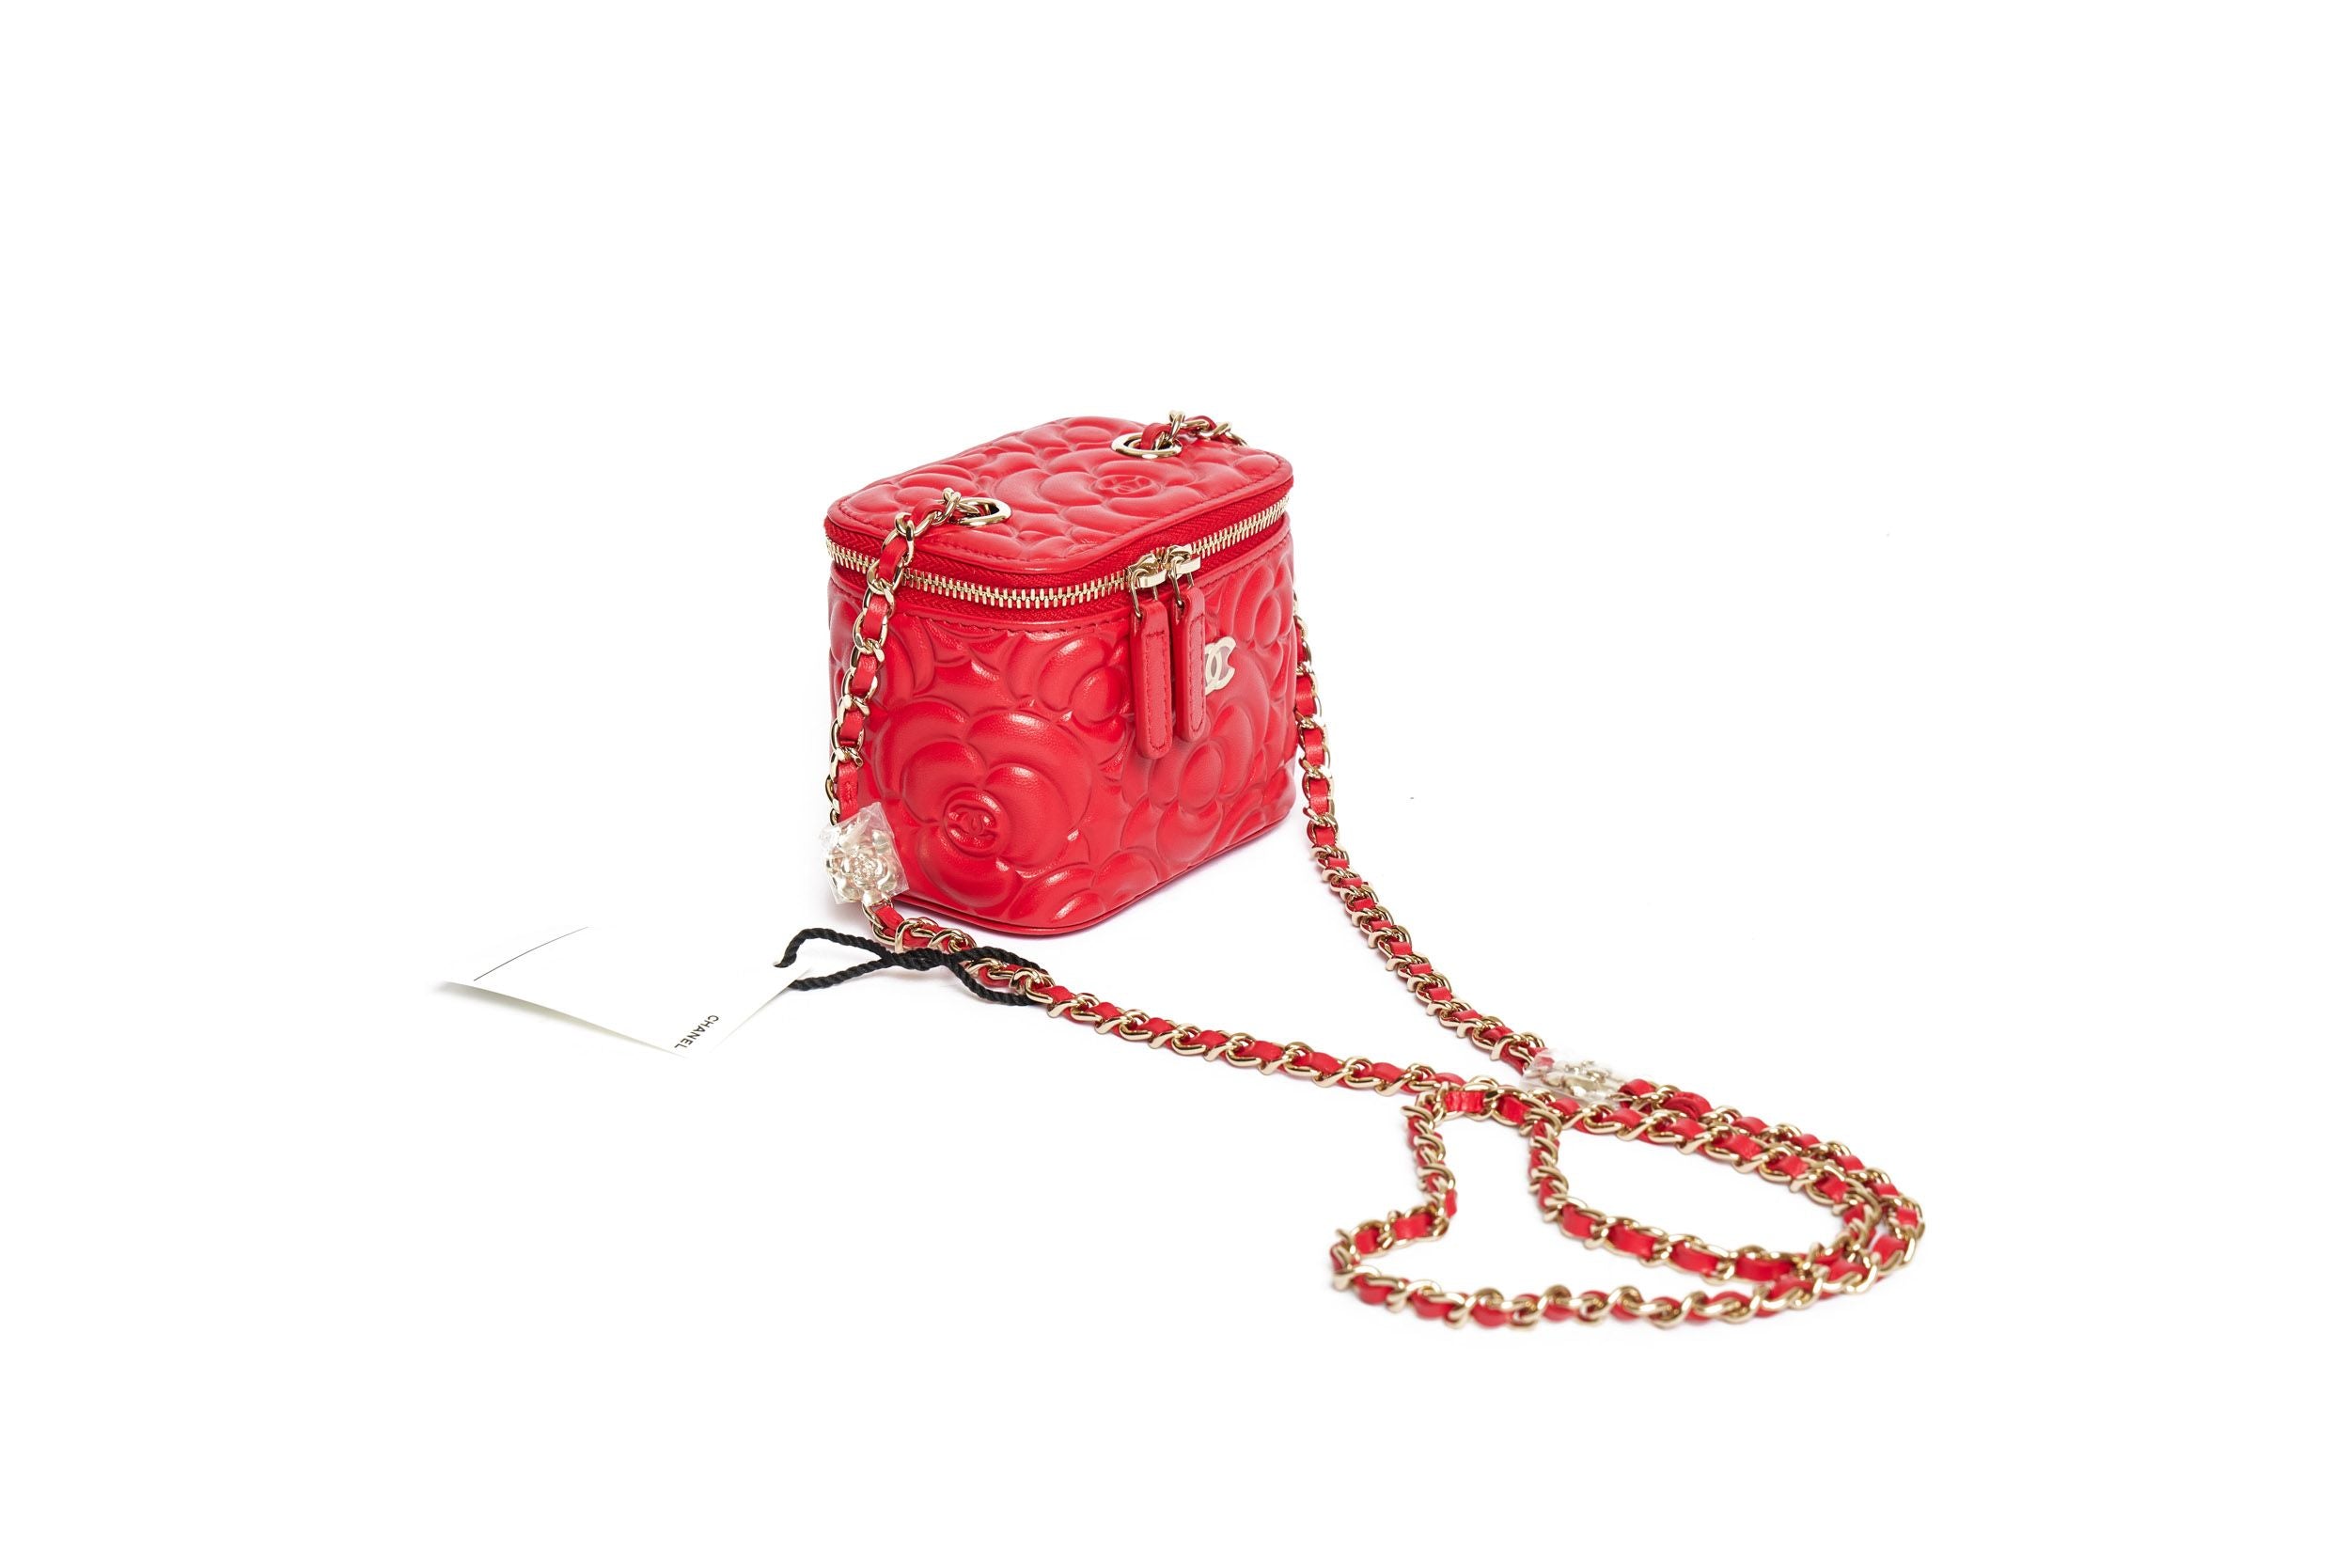 Brand New Authentic In Box Chanel Vanity Case Mini Chain Bag Black